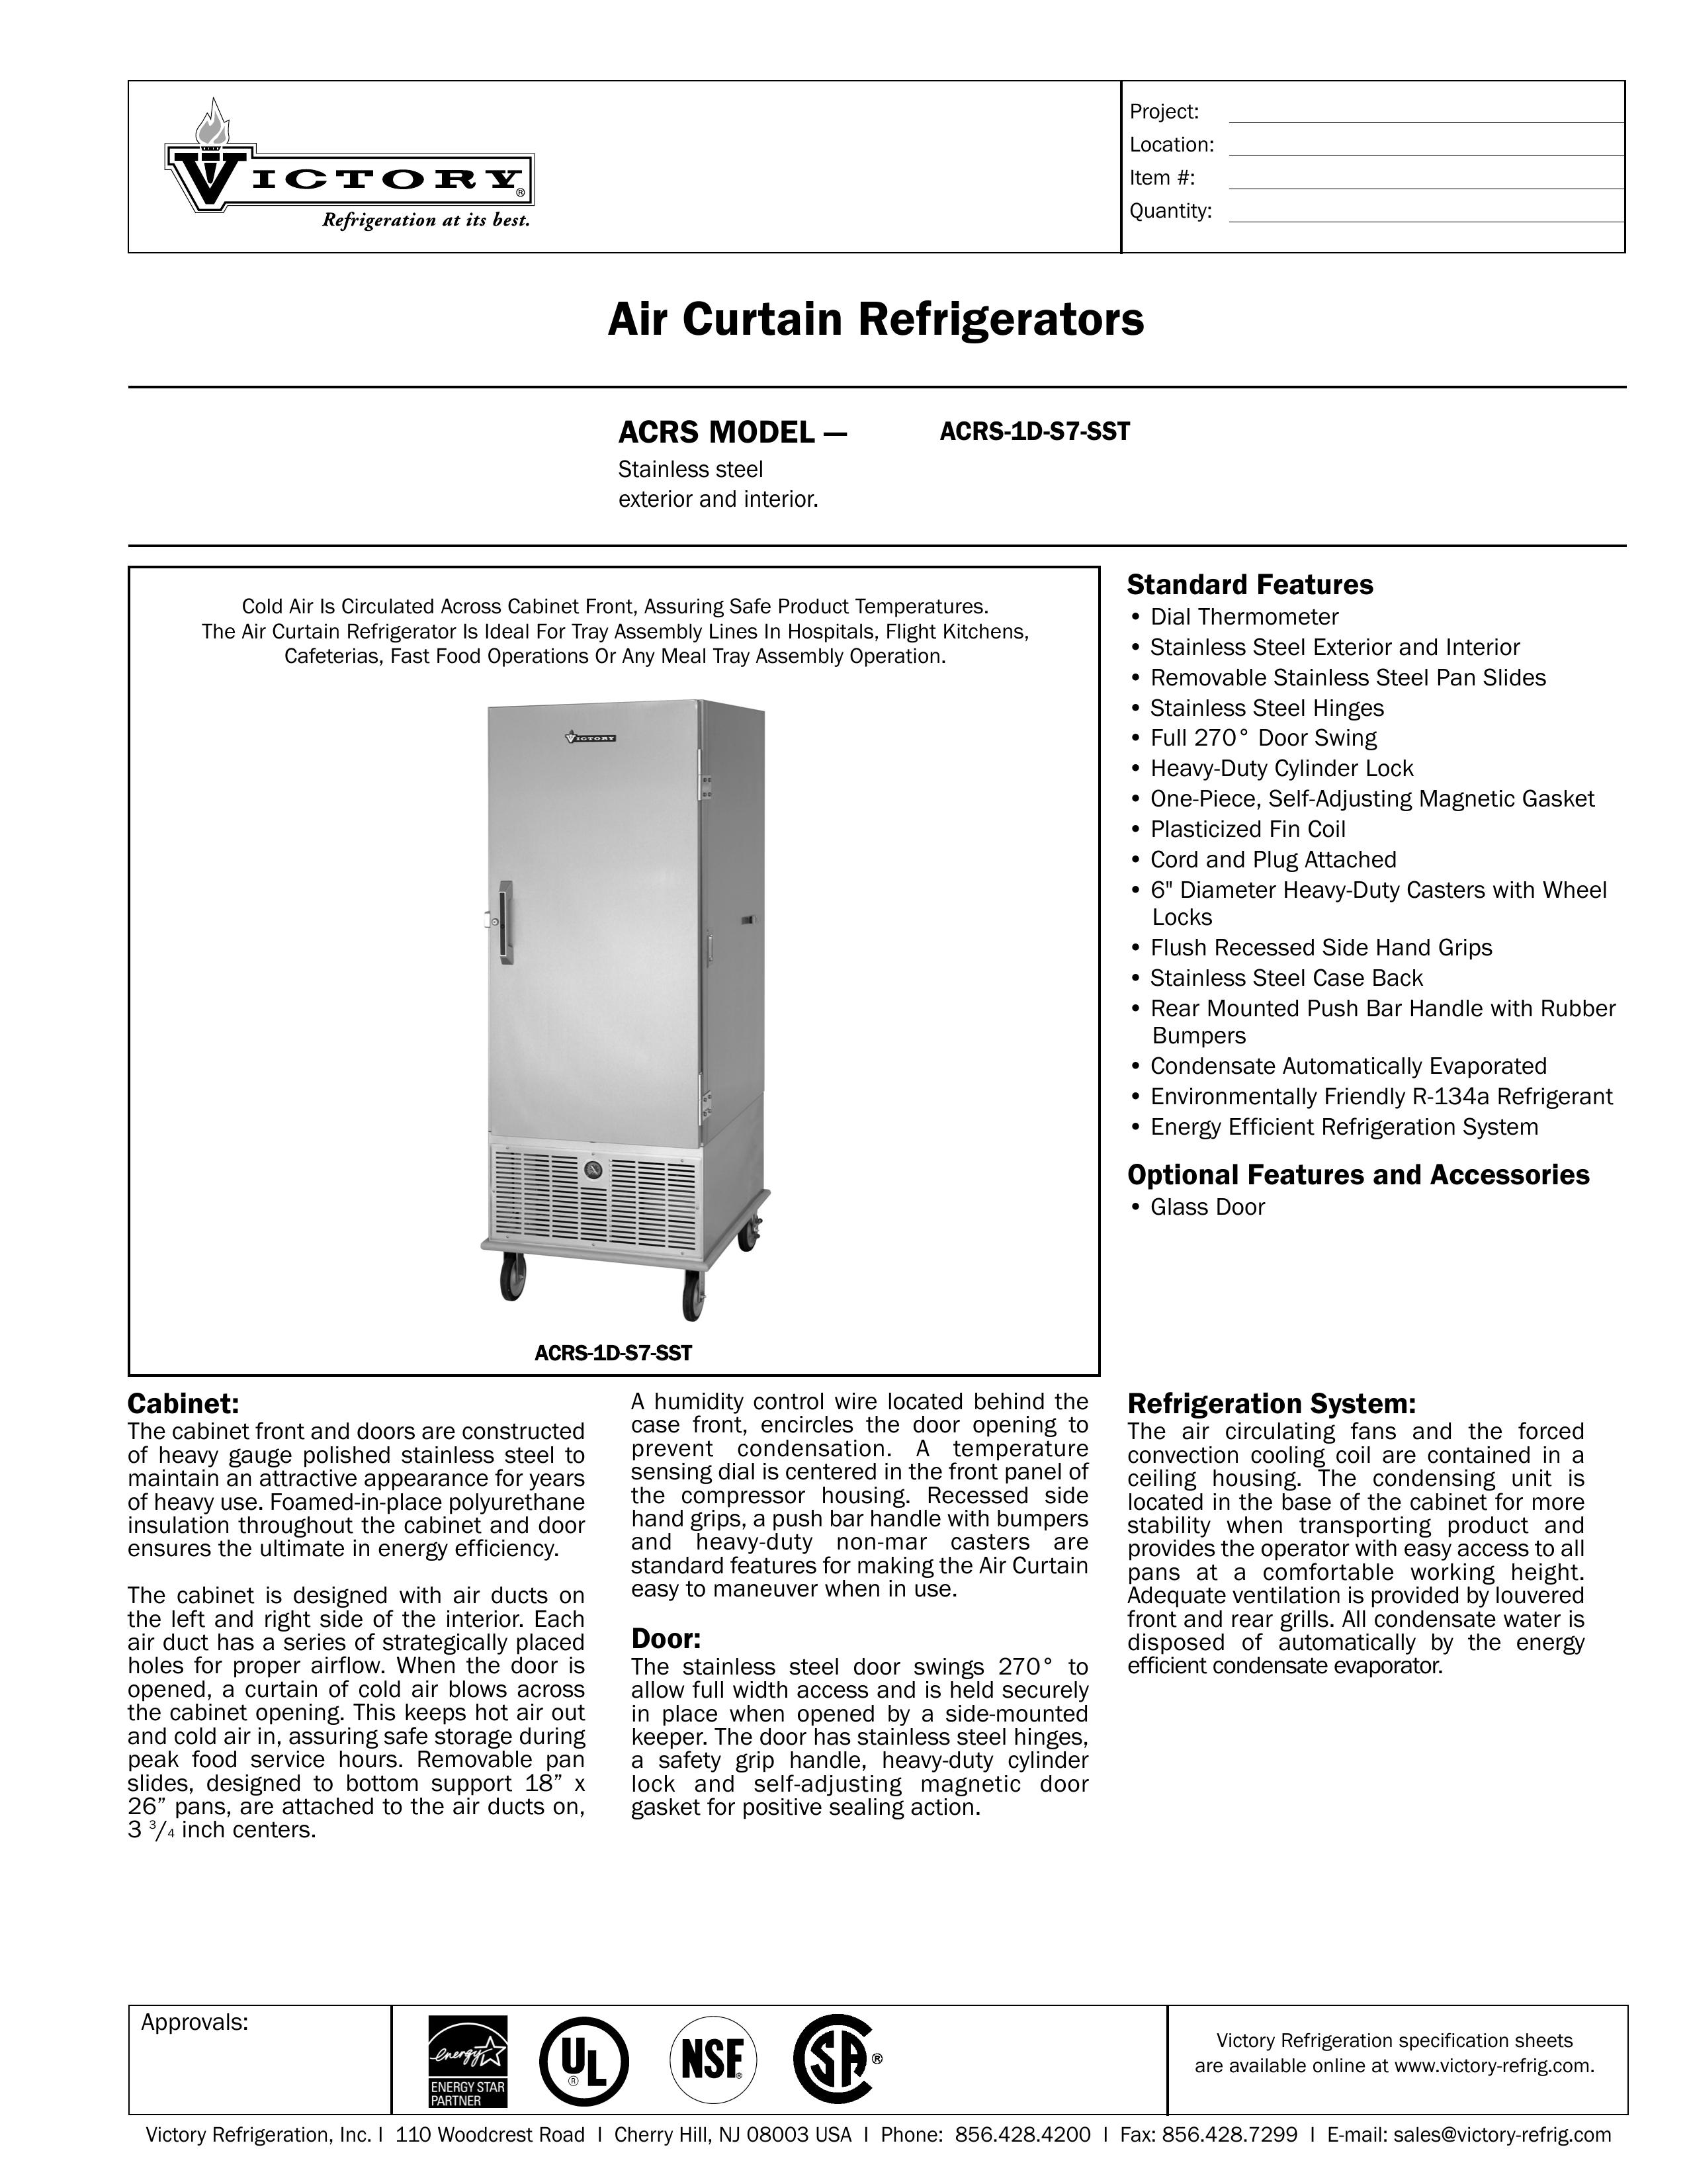 Victory Refrigeration ACRS-1D-S7-SST Refrigerator User Manual